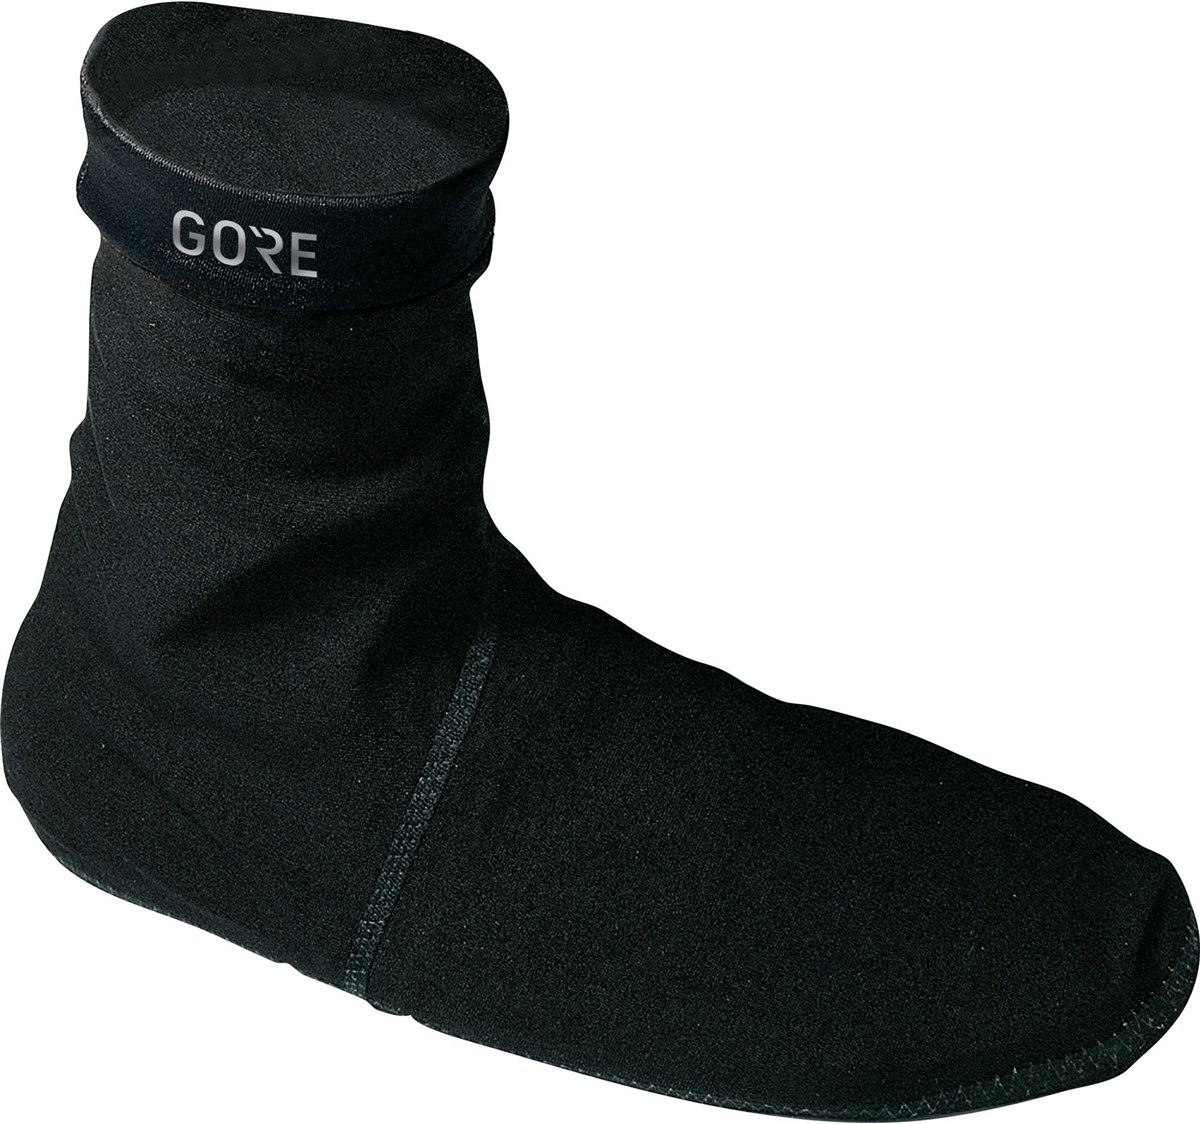 Gore C3 Gore-Tex Socks product image